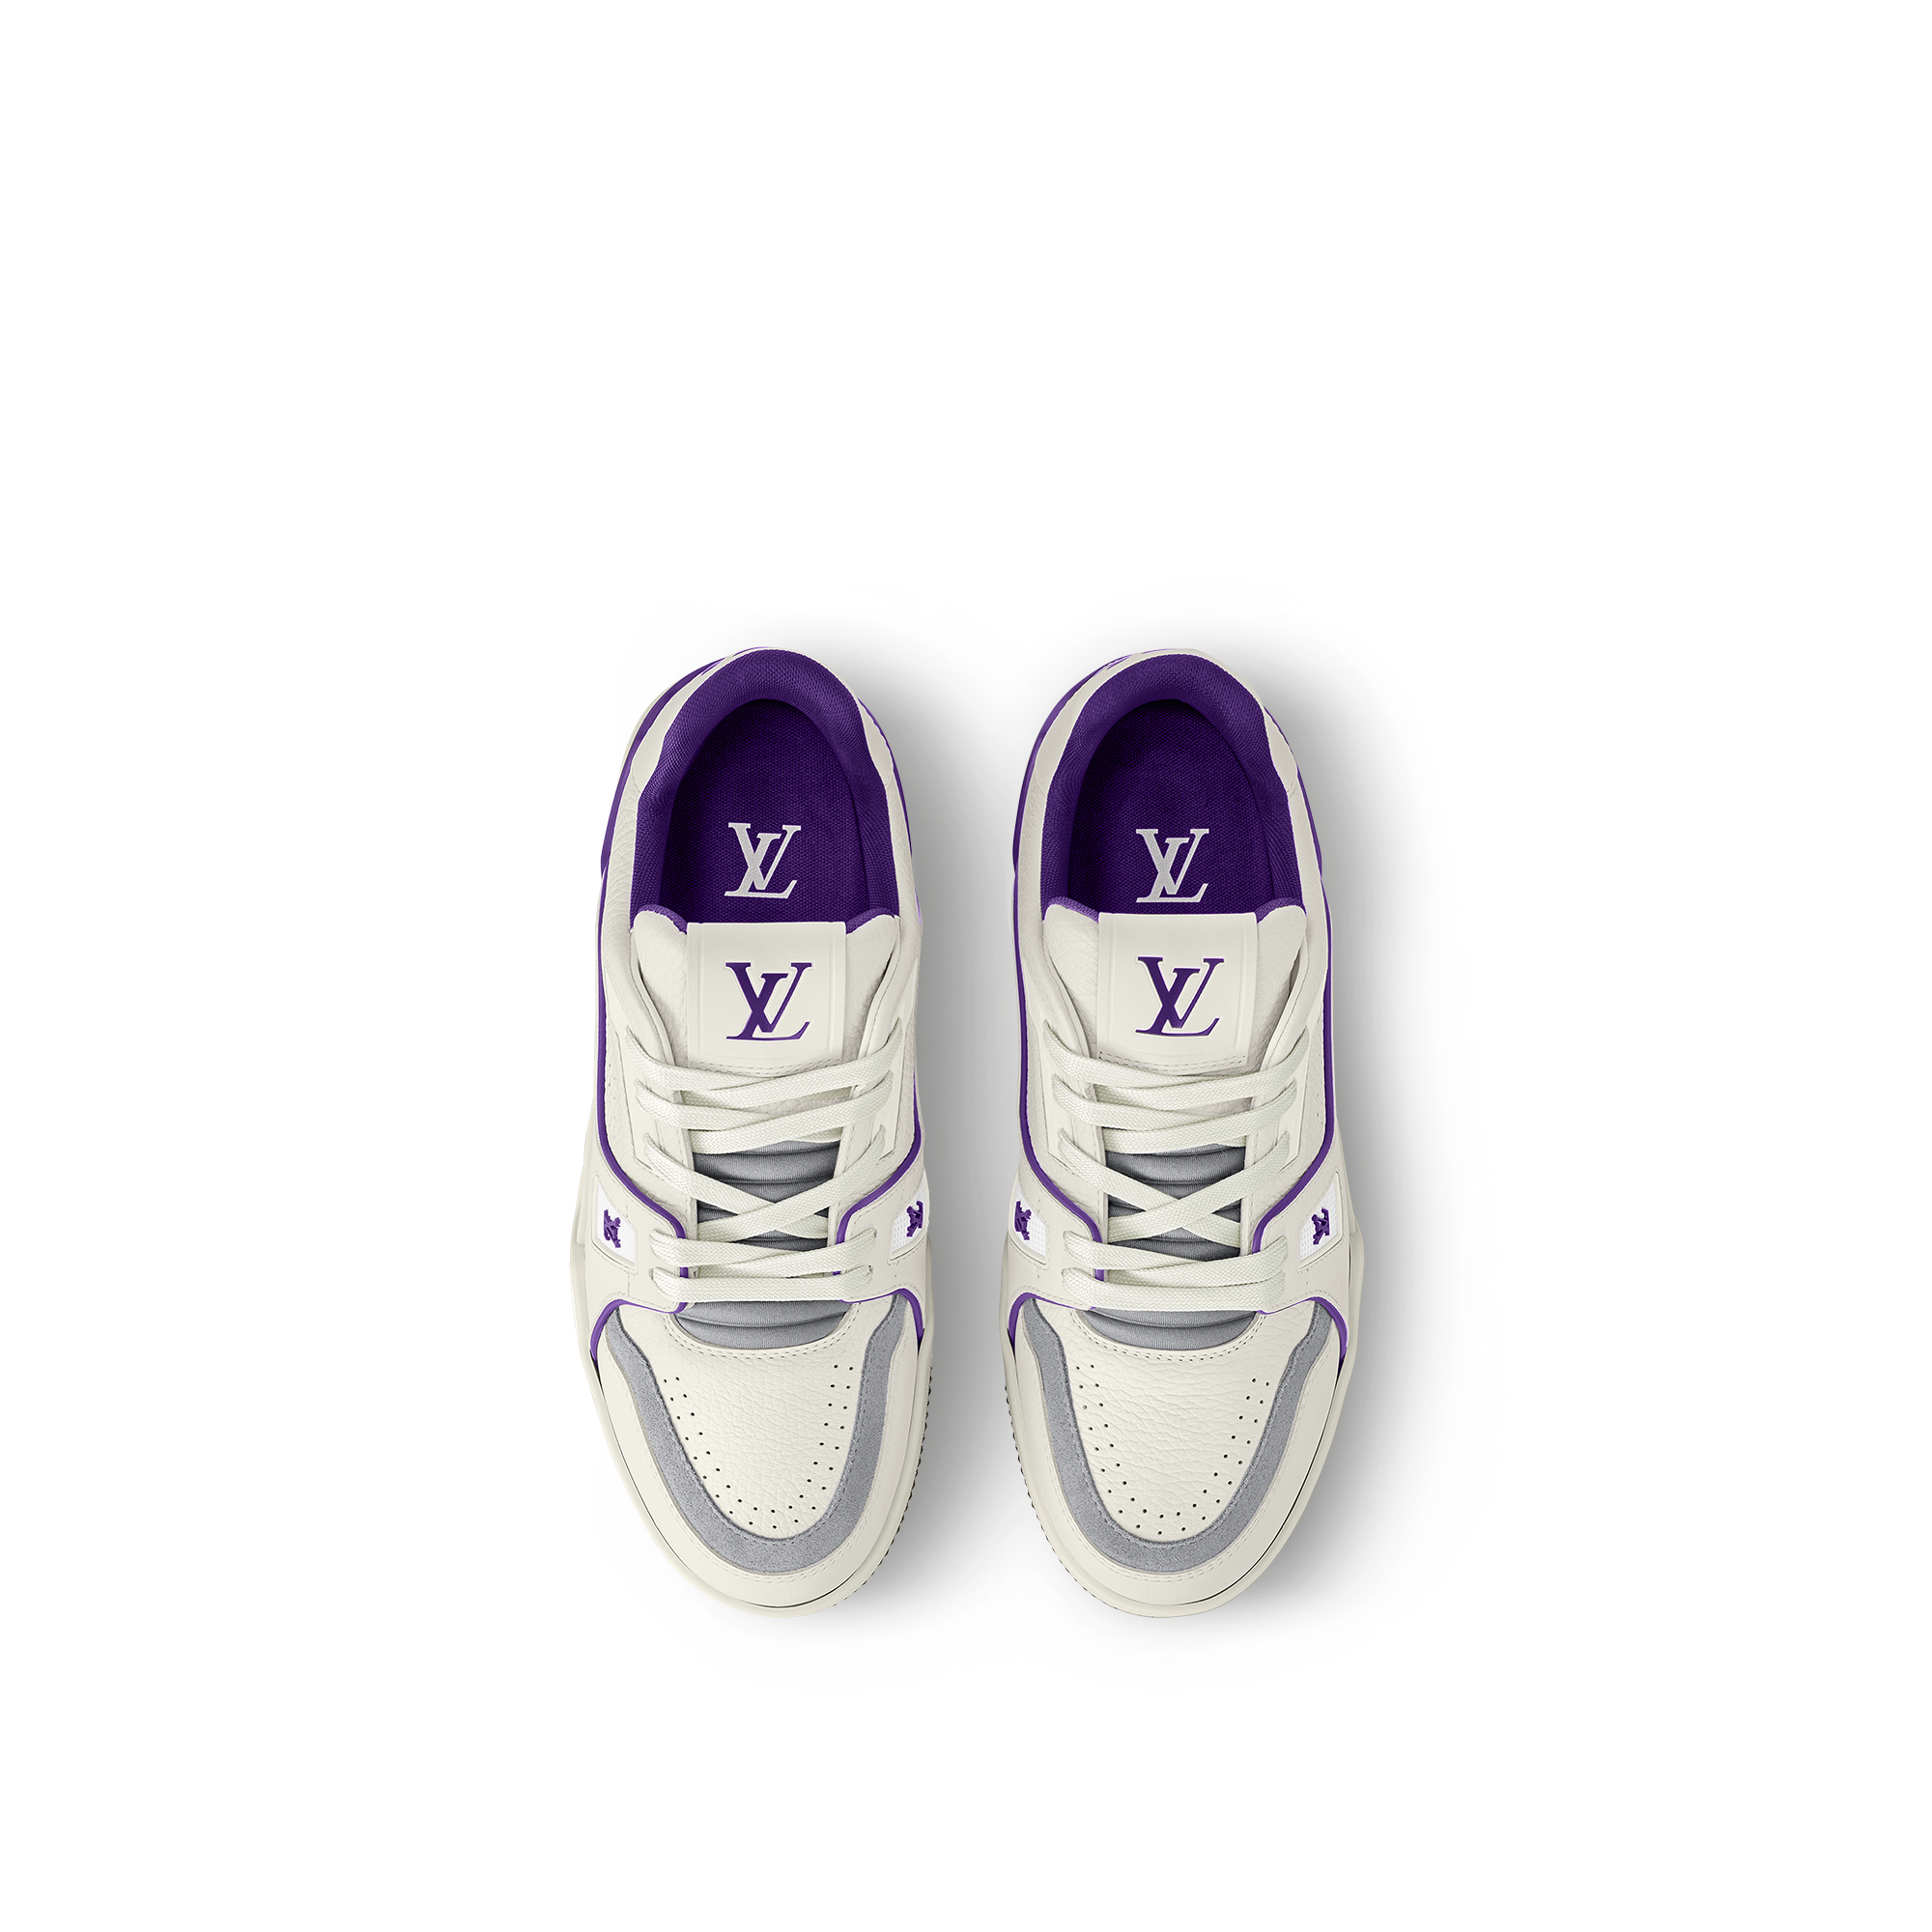 LV Trainer Sneaker White/Purple Women's